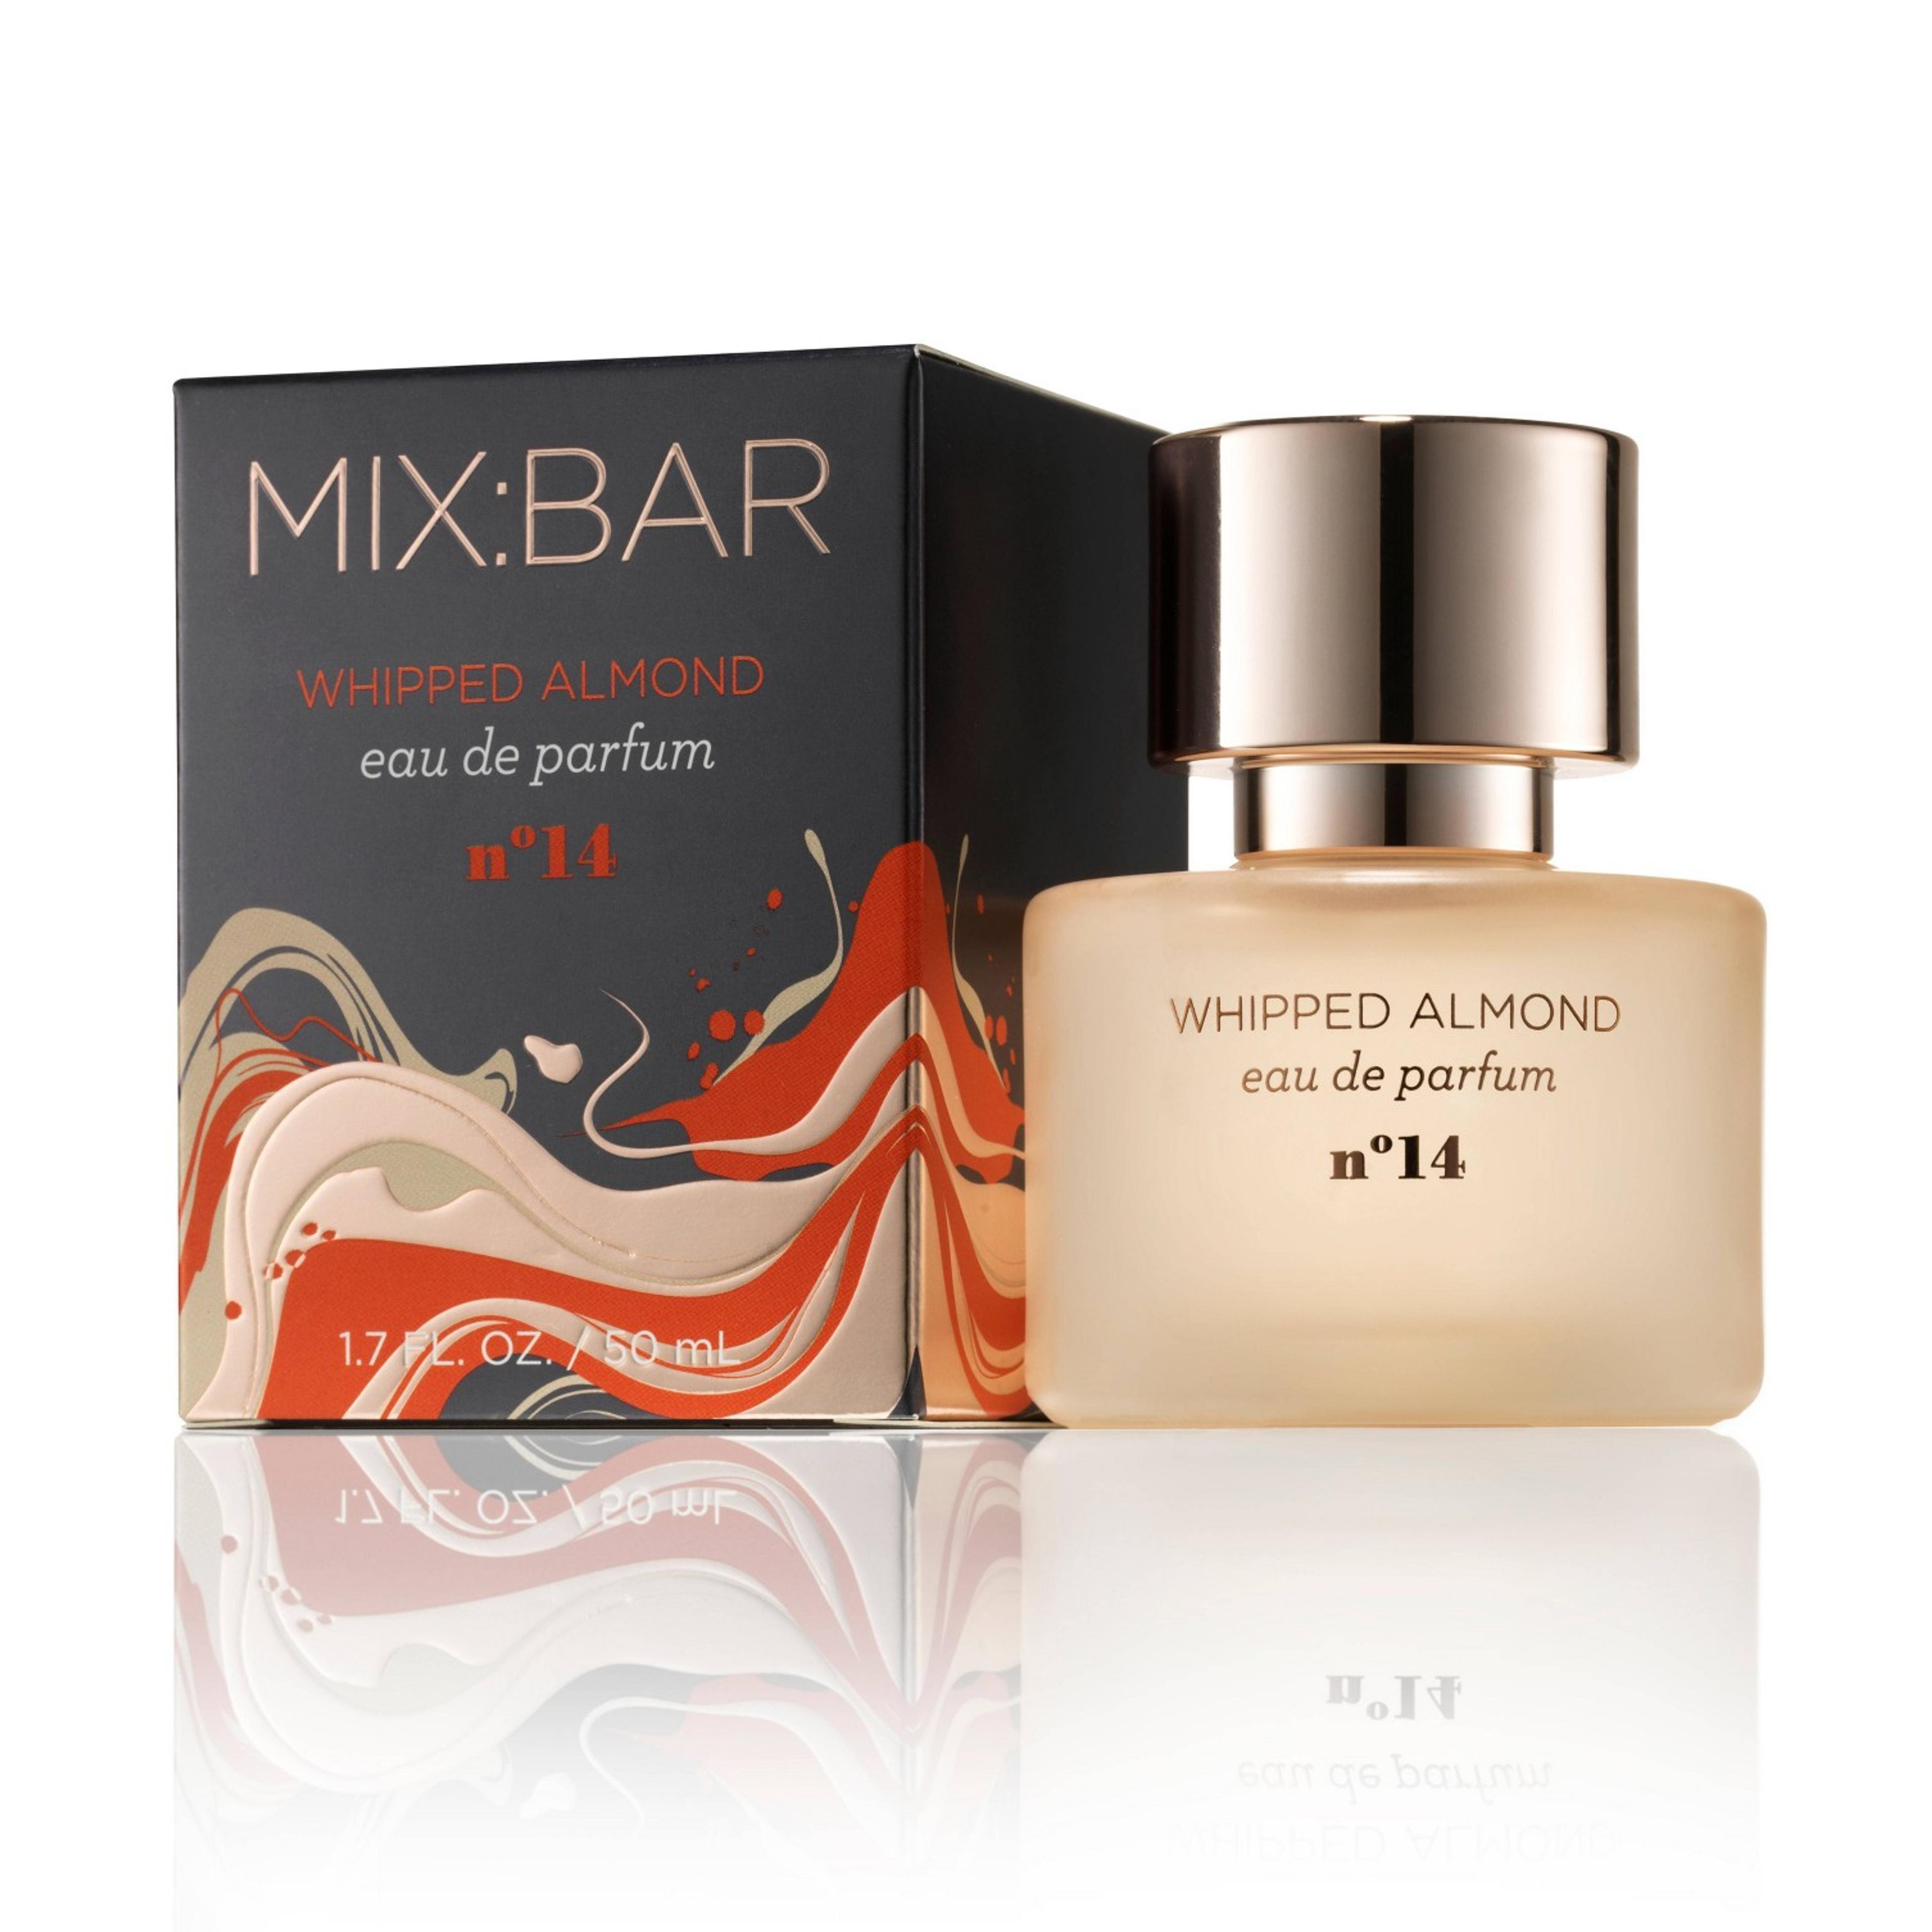 MIX:BAR Whipped Almond Eau de Parfum Spray - Clean &#38; Vegan  Fragrance for Women - 1.7 fl oz